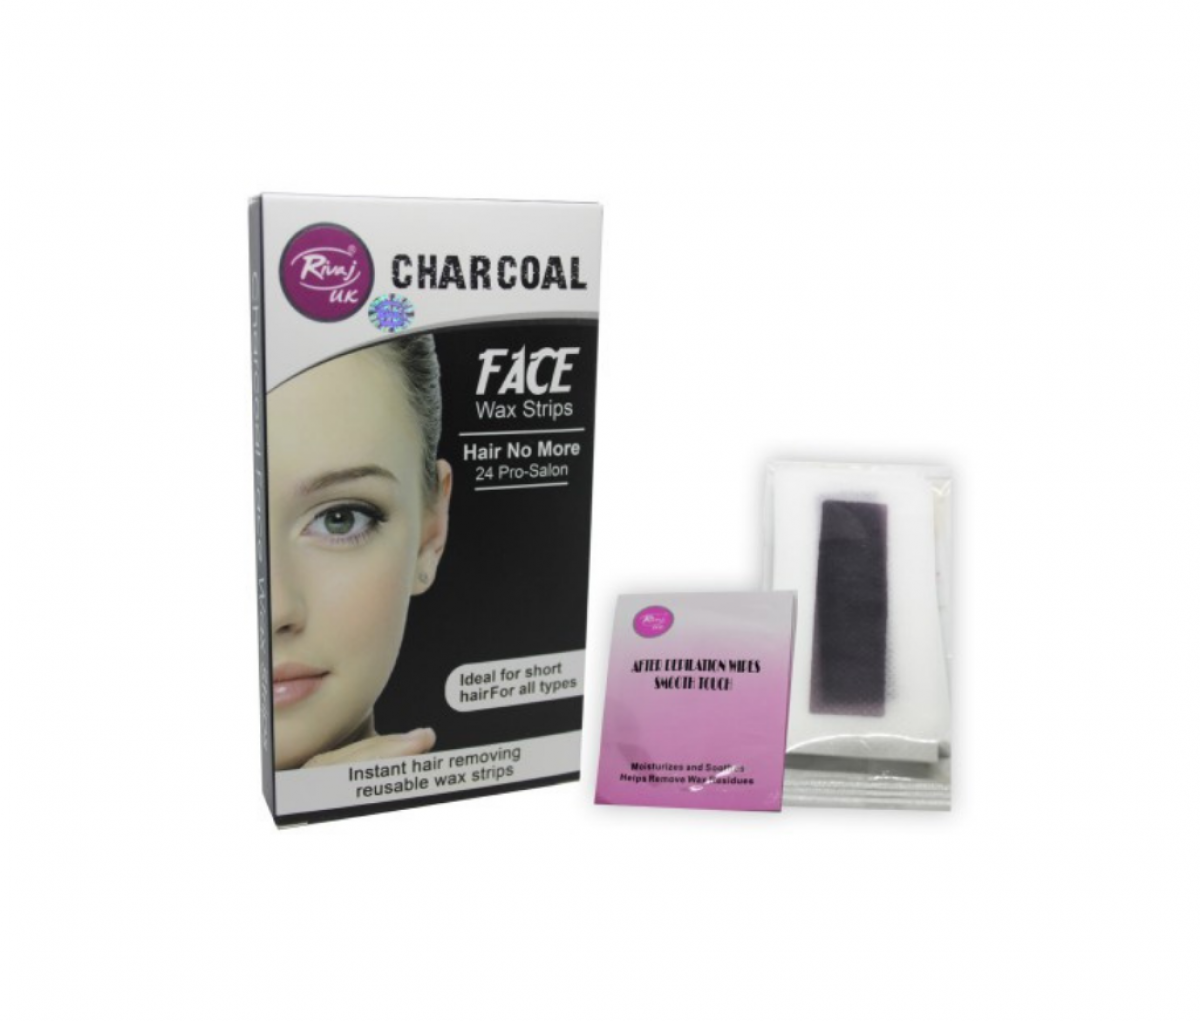 Rivaj Charcoal Facial Wax Strips